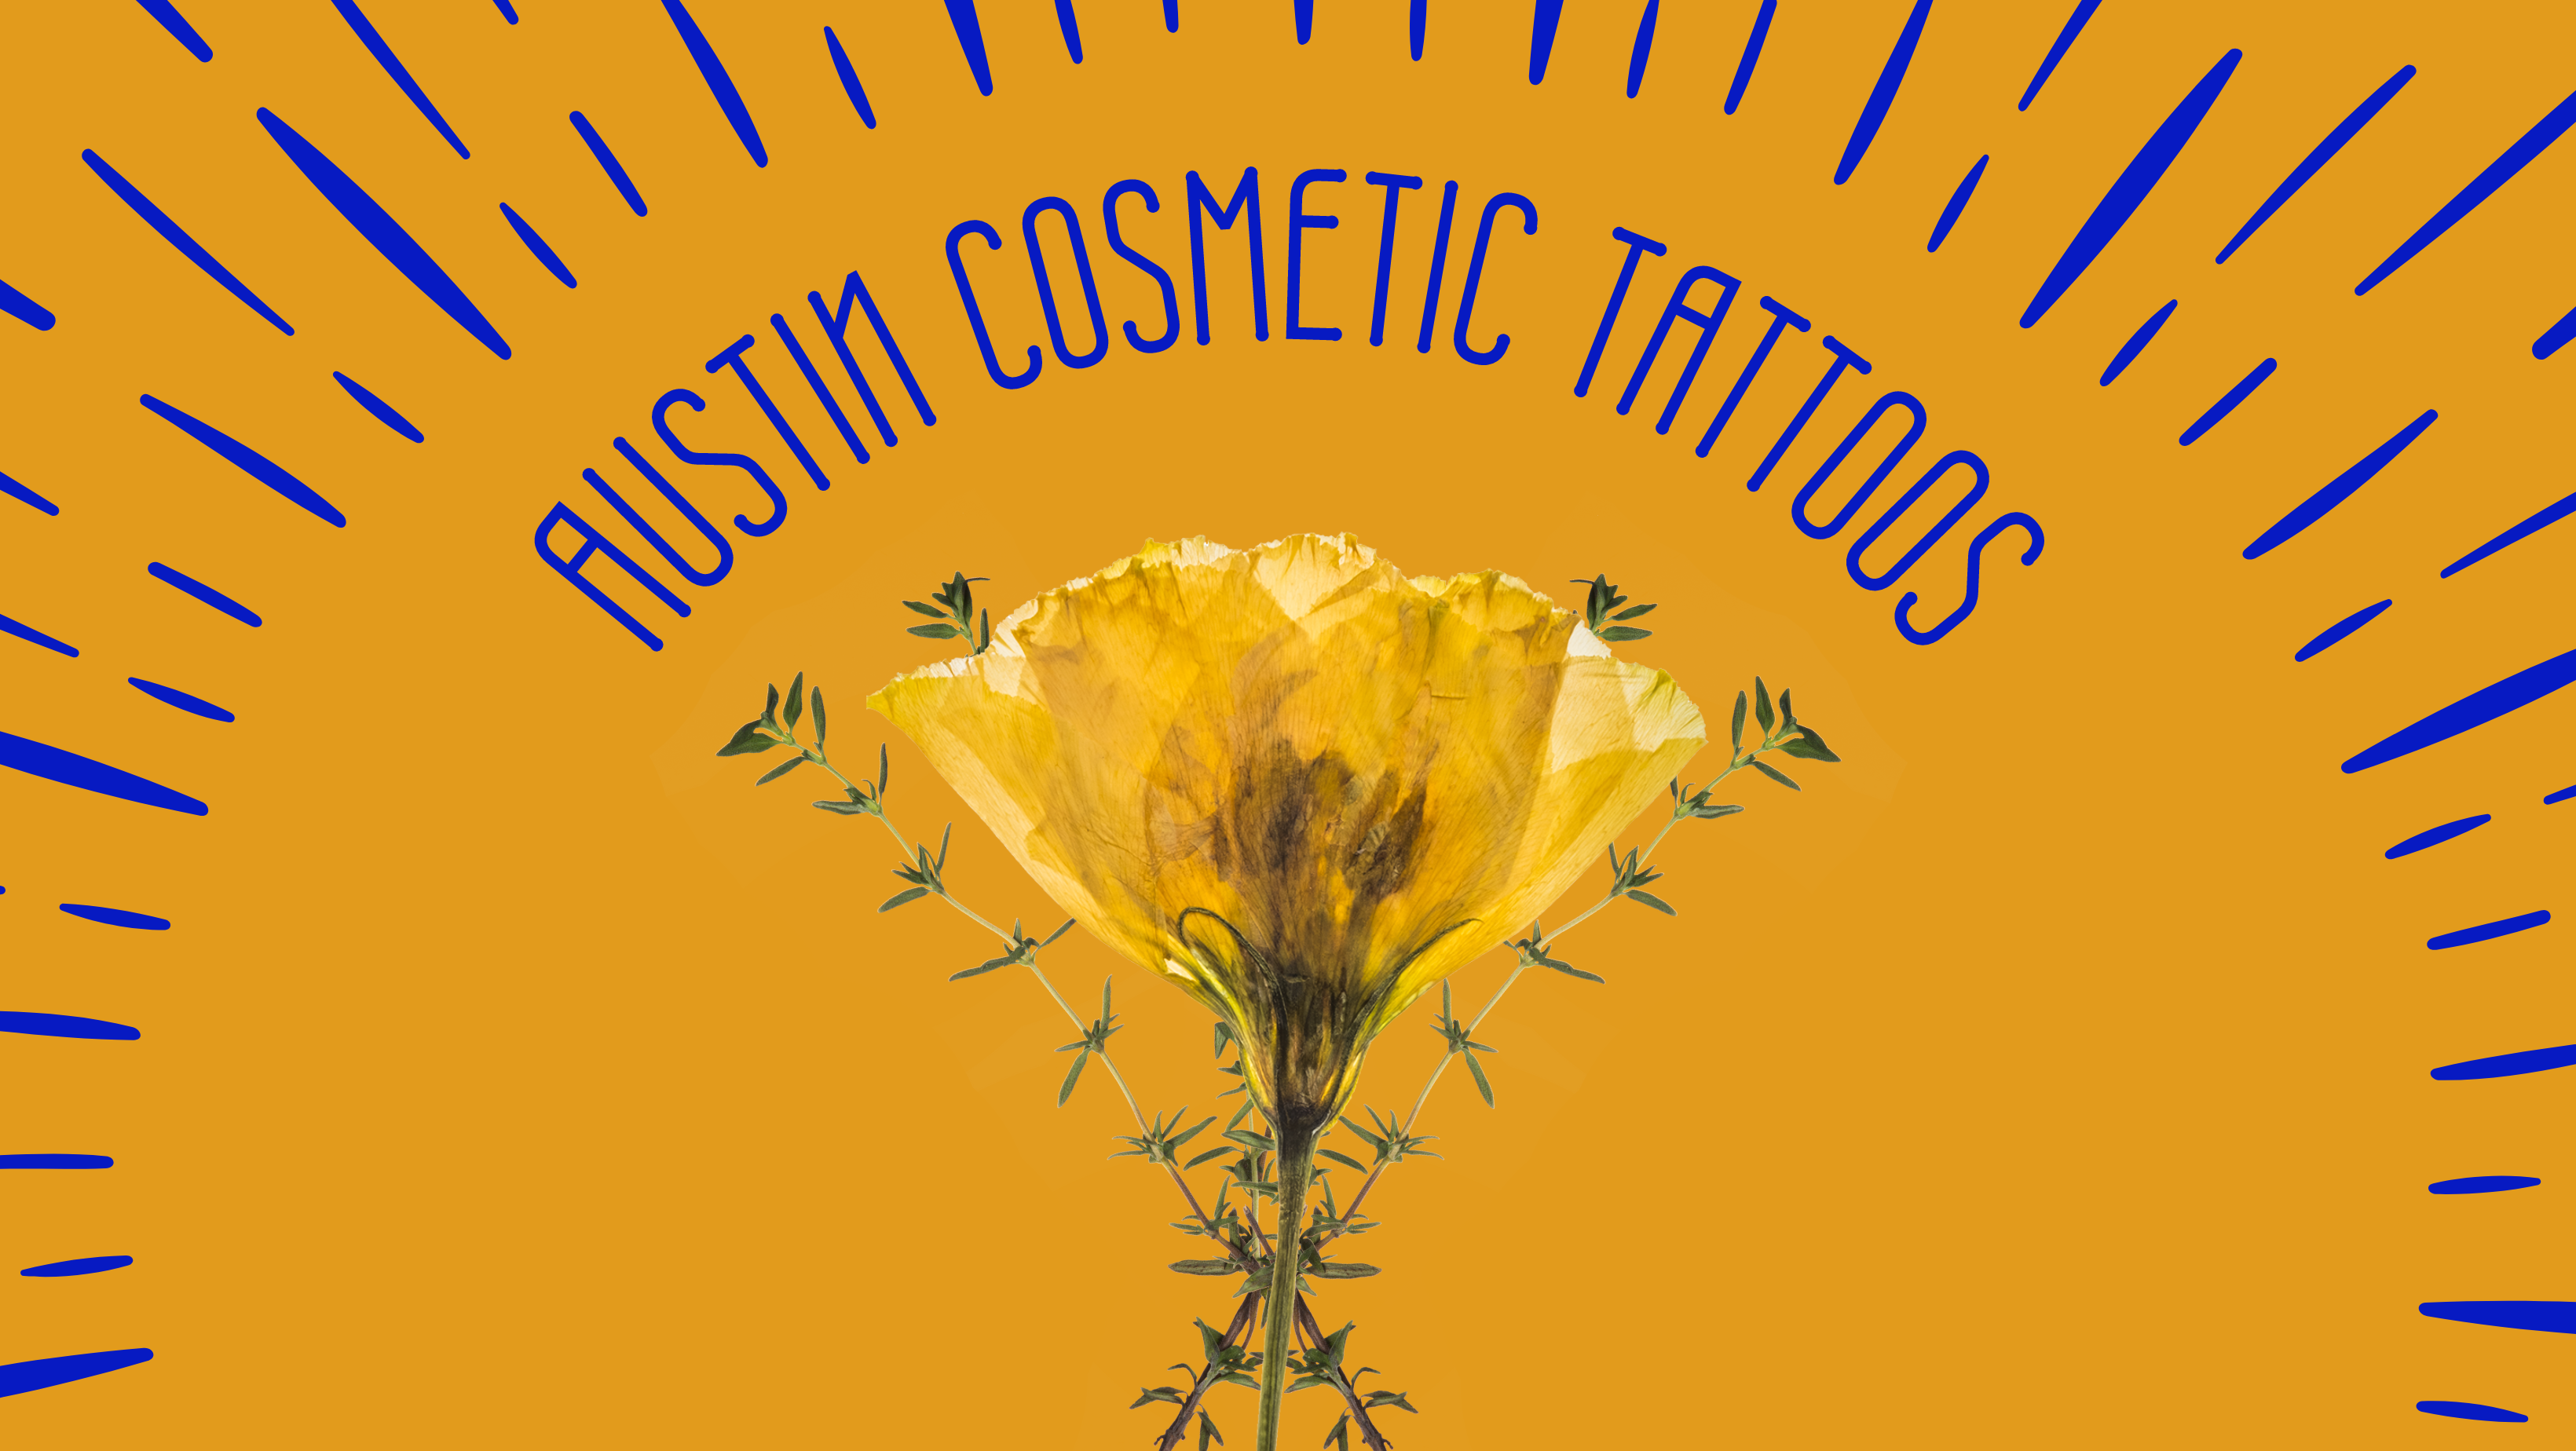 Austin Cosmetic Tattoos